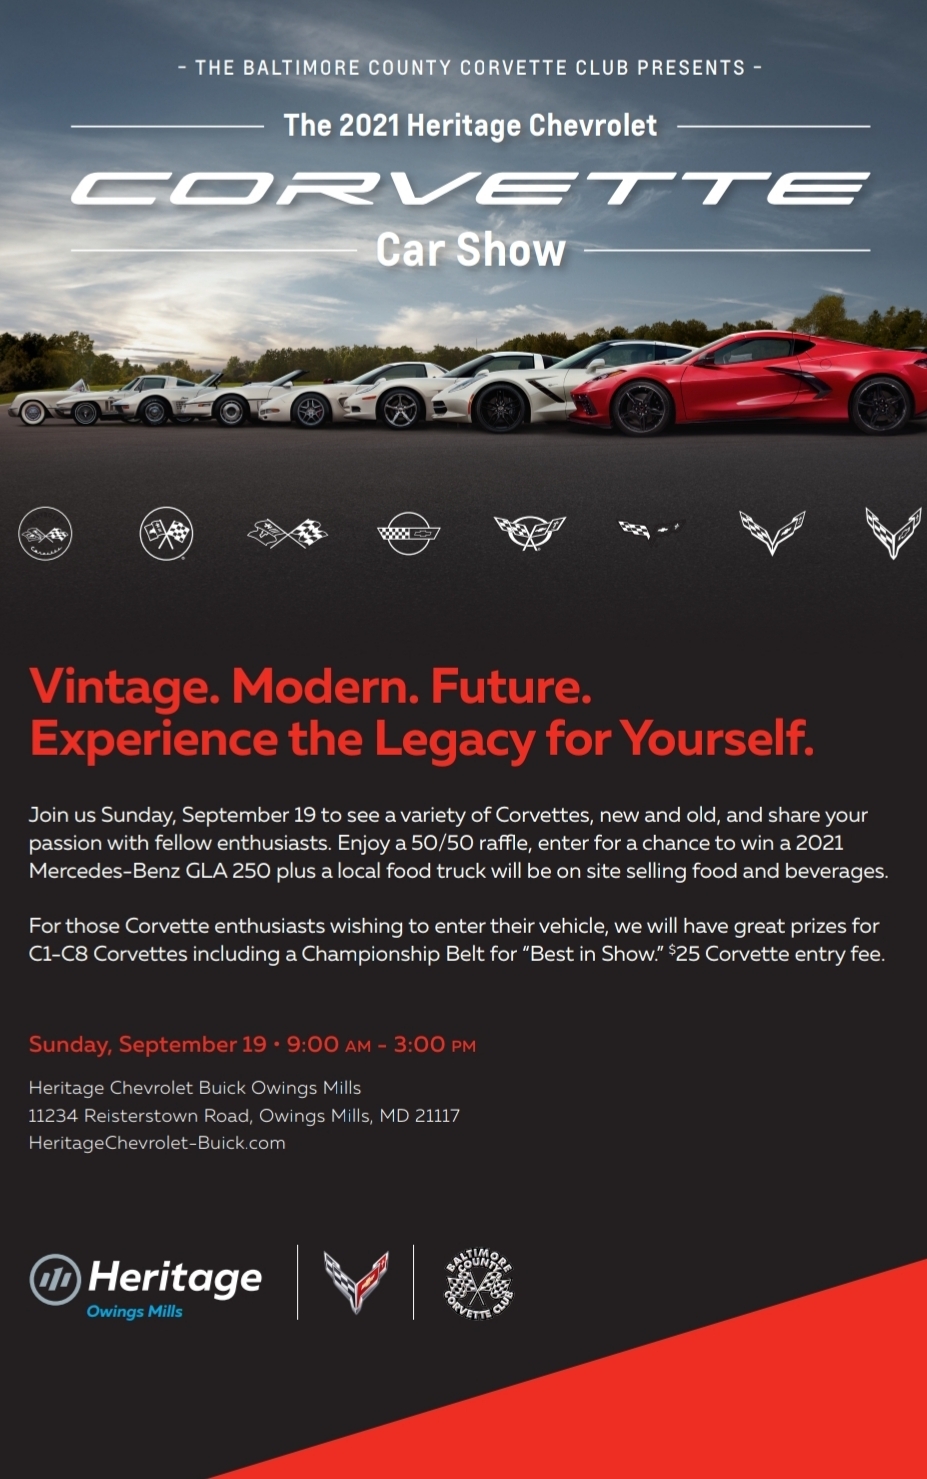 Heritage Chevrolet Corvette Car Show 2021